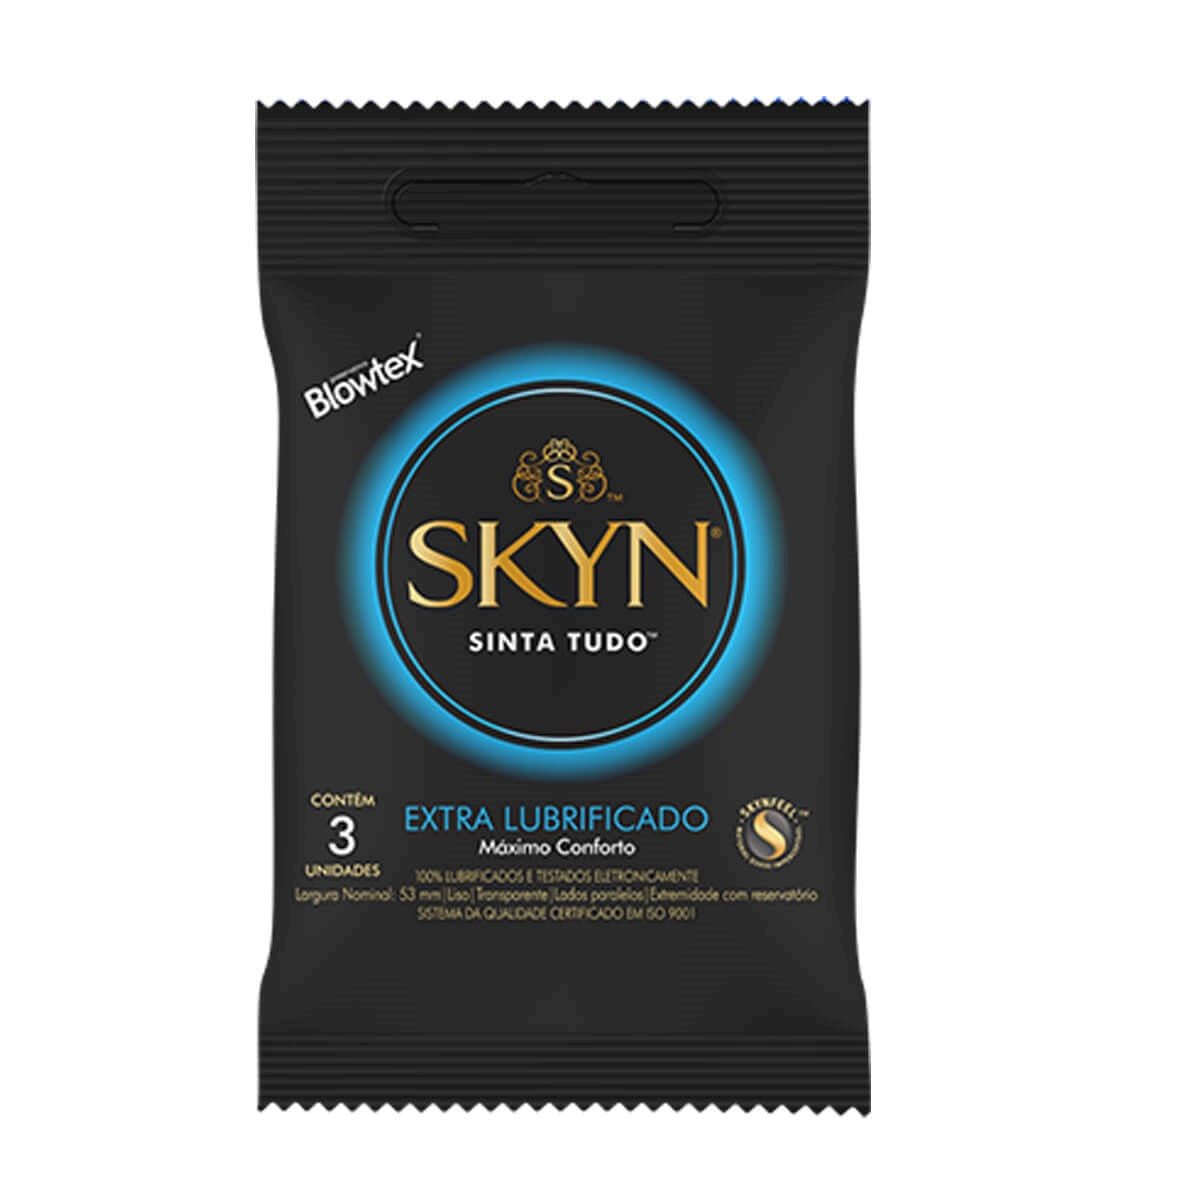 Preservativos Skyn Extra Lubrificado Máximo Conforto com 3 unidades Blowtex